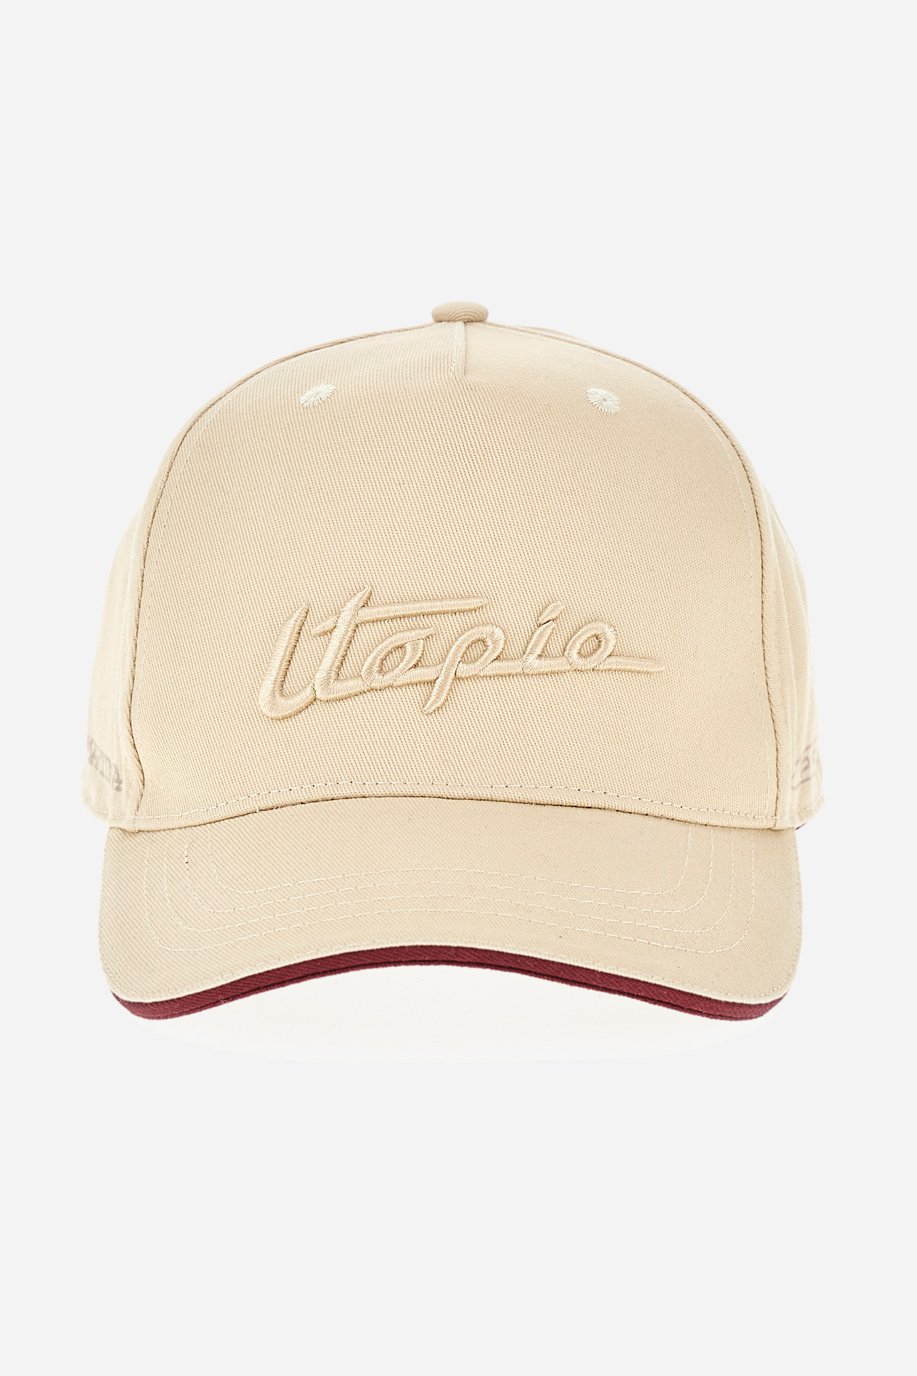 Cappellino da baseball in cotone - Yujin - Cappelli | La Martina - Official Online Shop